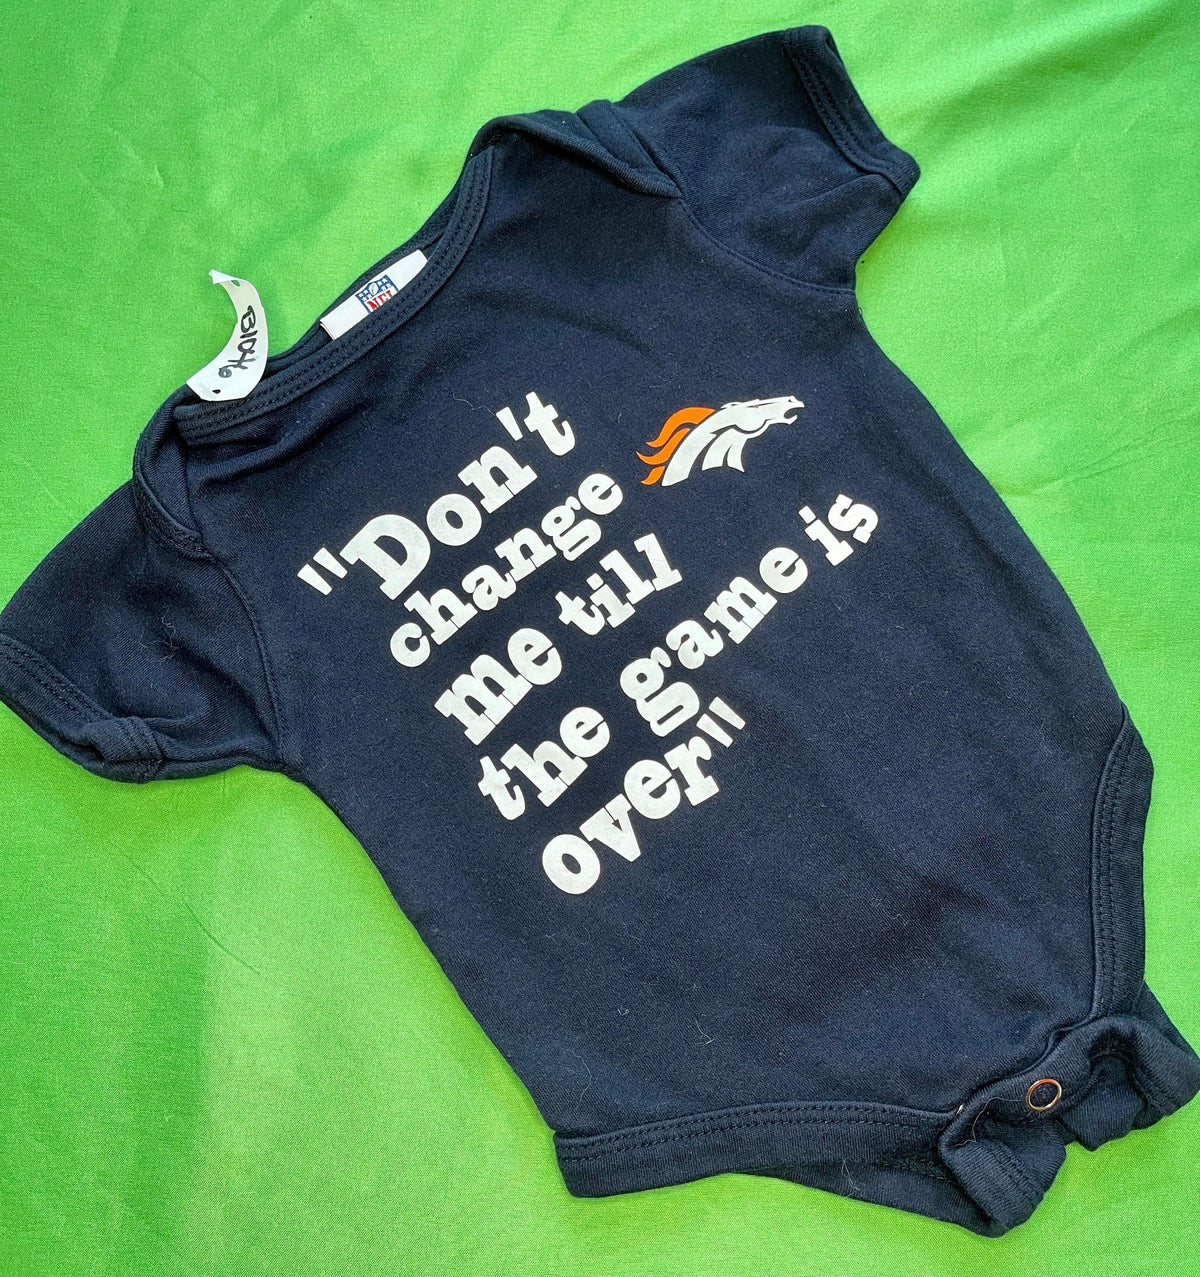 NFL Denver Broncos  "Don't Change Me" Baby-Grow 3-6 months